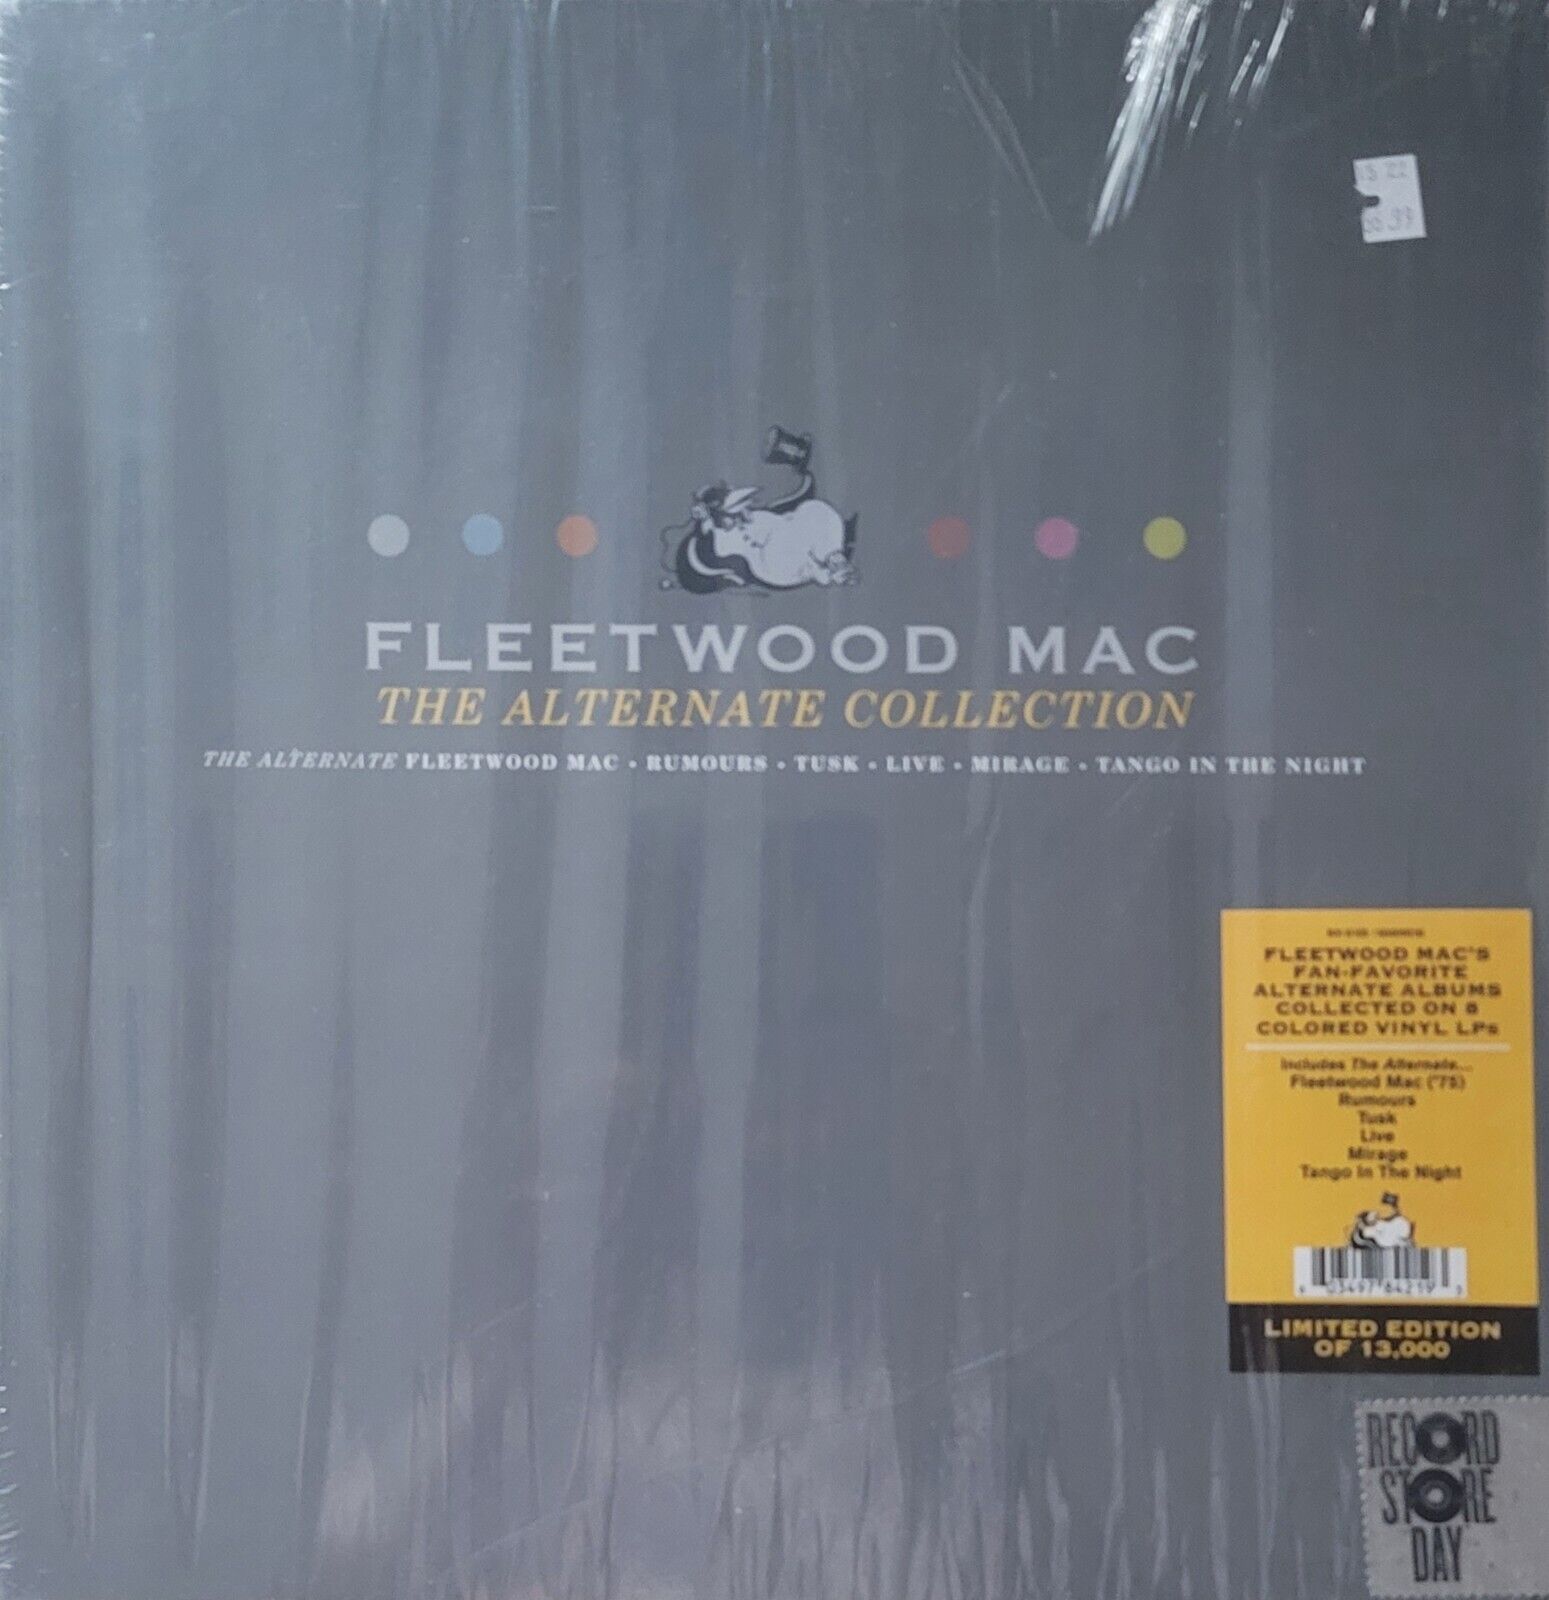 Fleetwood Mac - The Alternate Collection 8x LP box set, Reprise